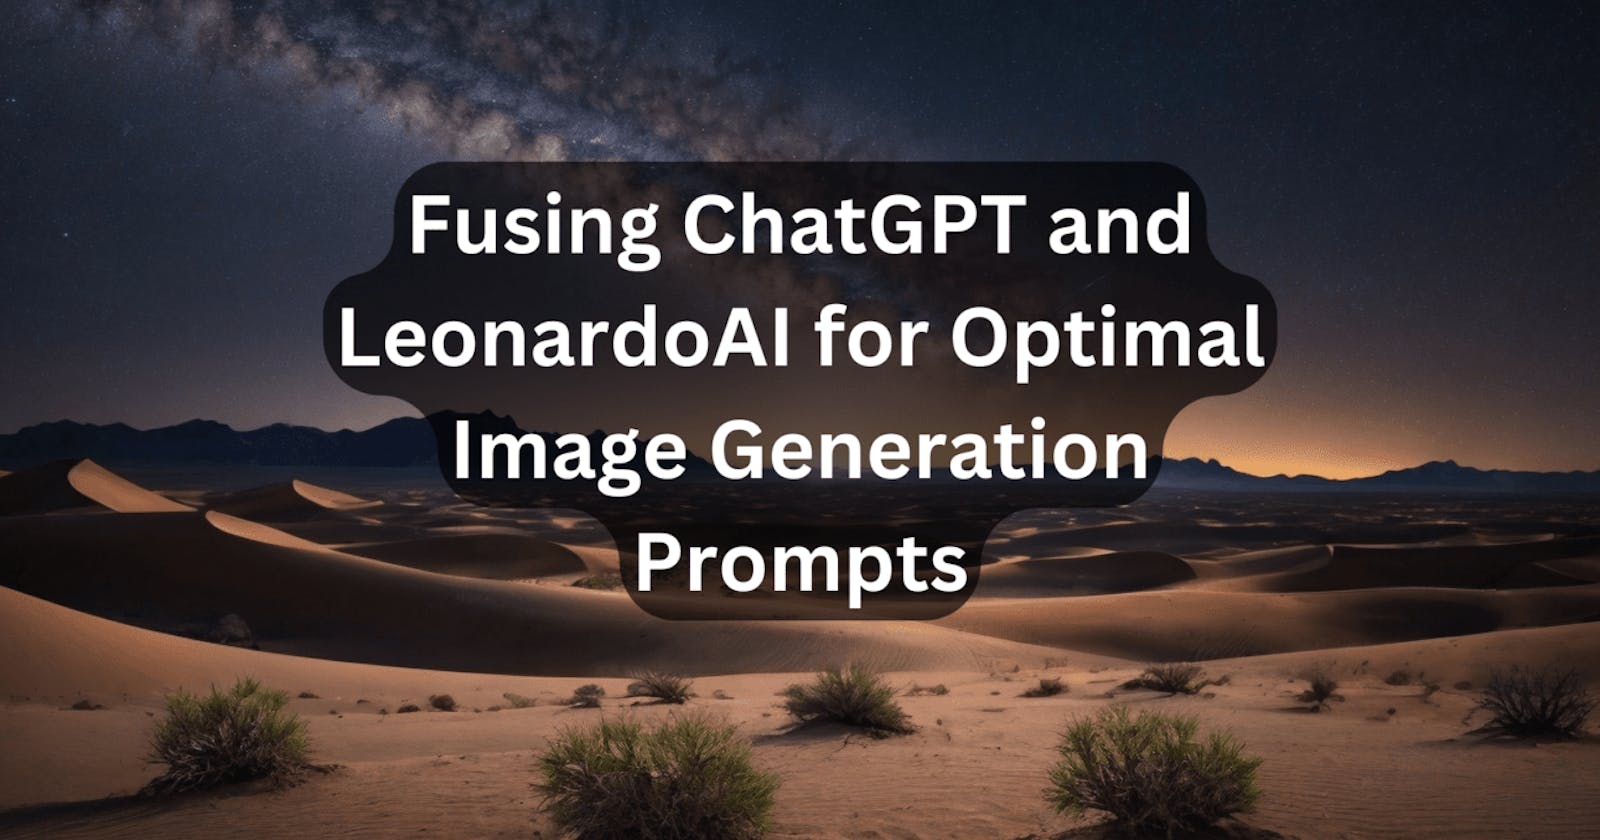 Fusing ChatGPT and LeonardoAI for Optimal Image Generation Prompts